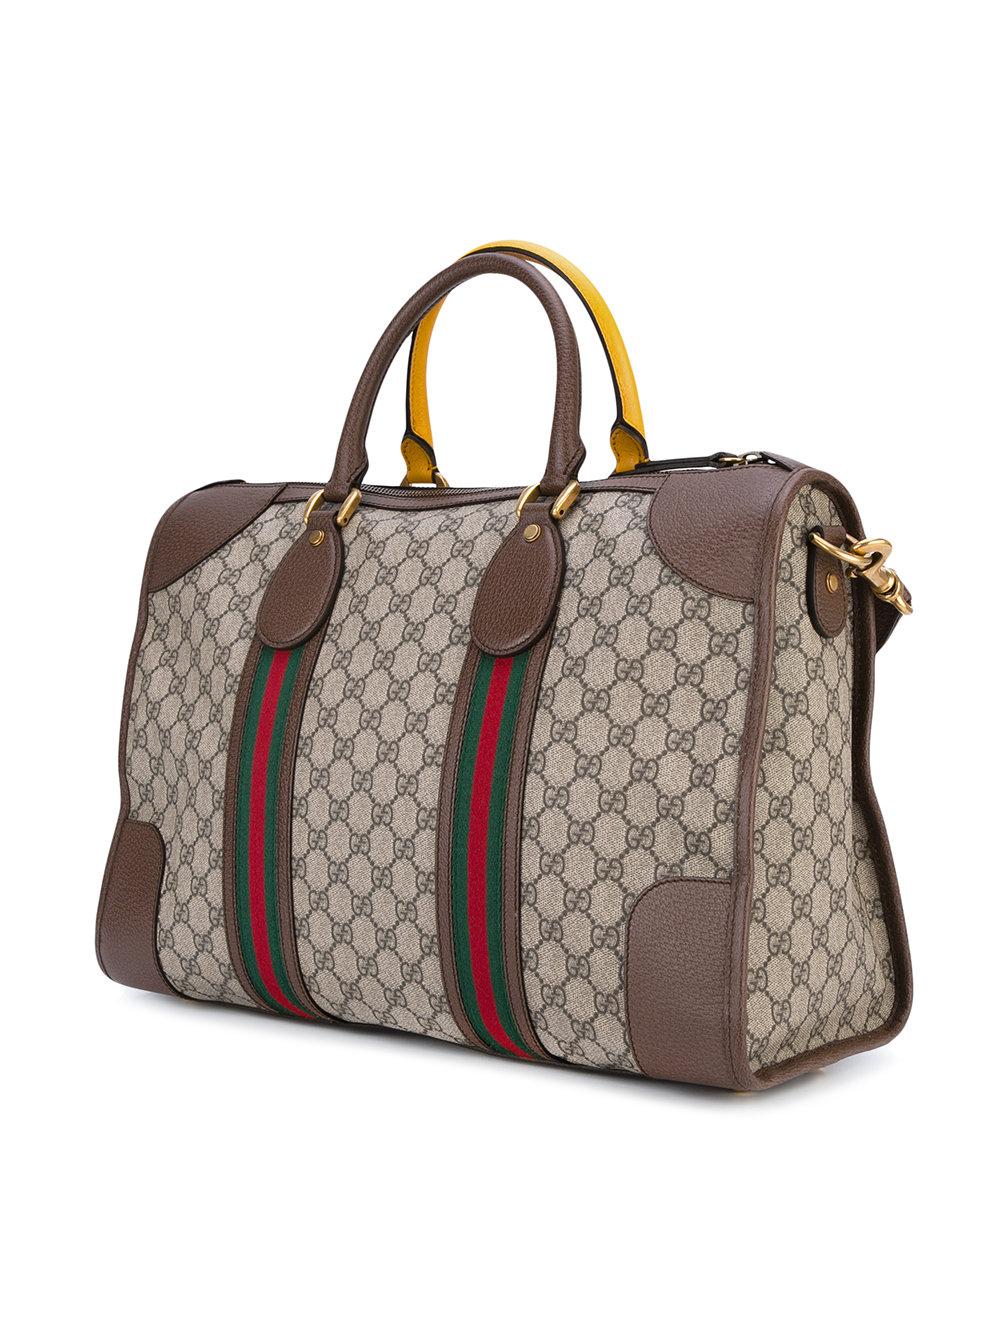 Gucci - Gg Supreme Duffle Bag - Men - Polyurethane/leather - One Size ...